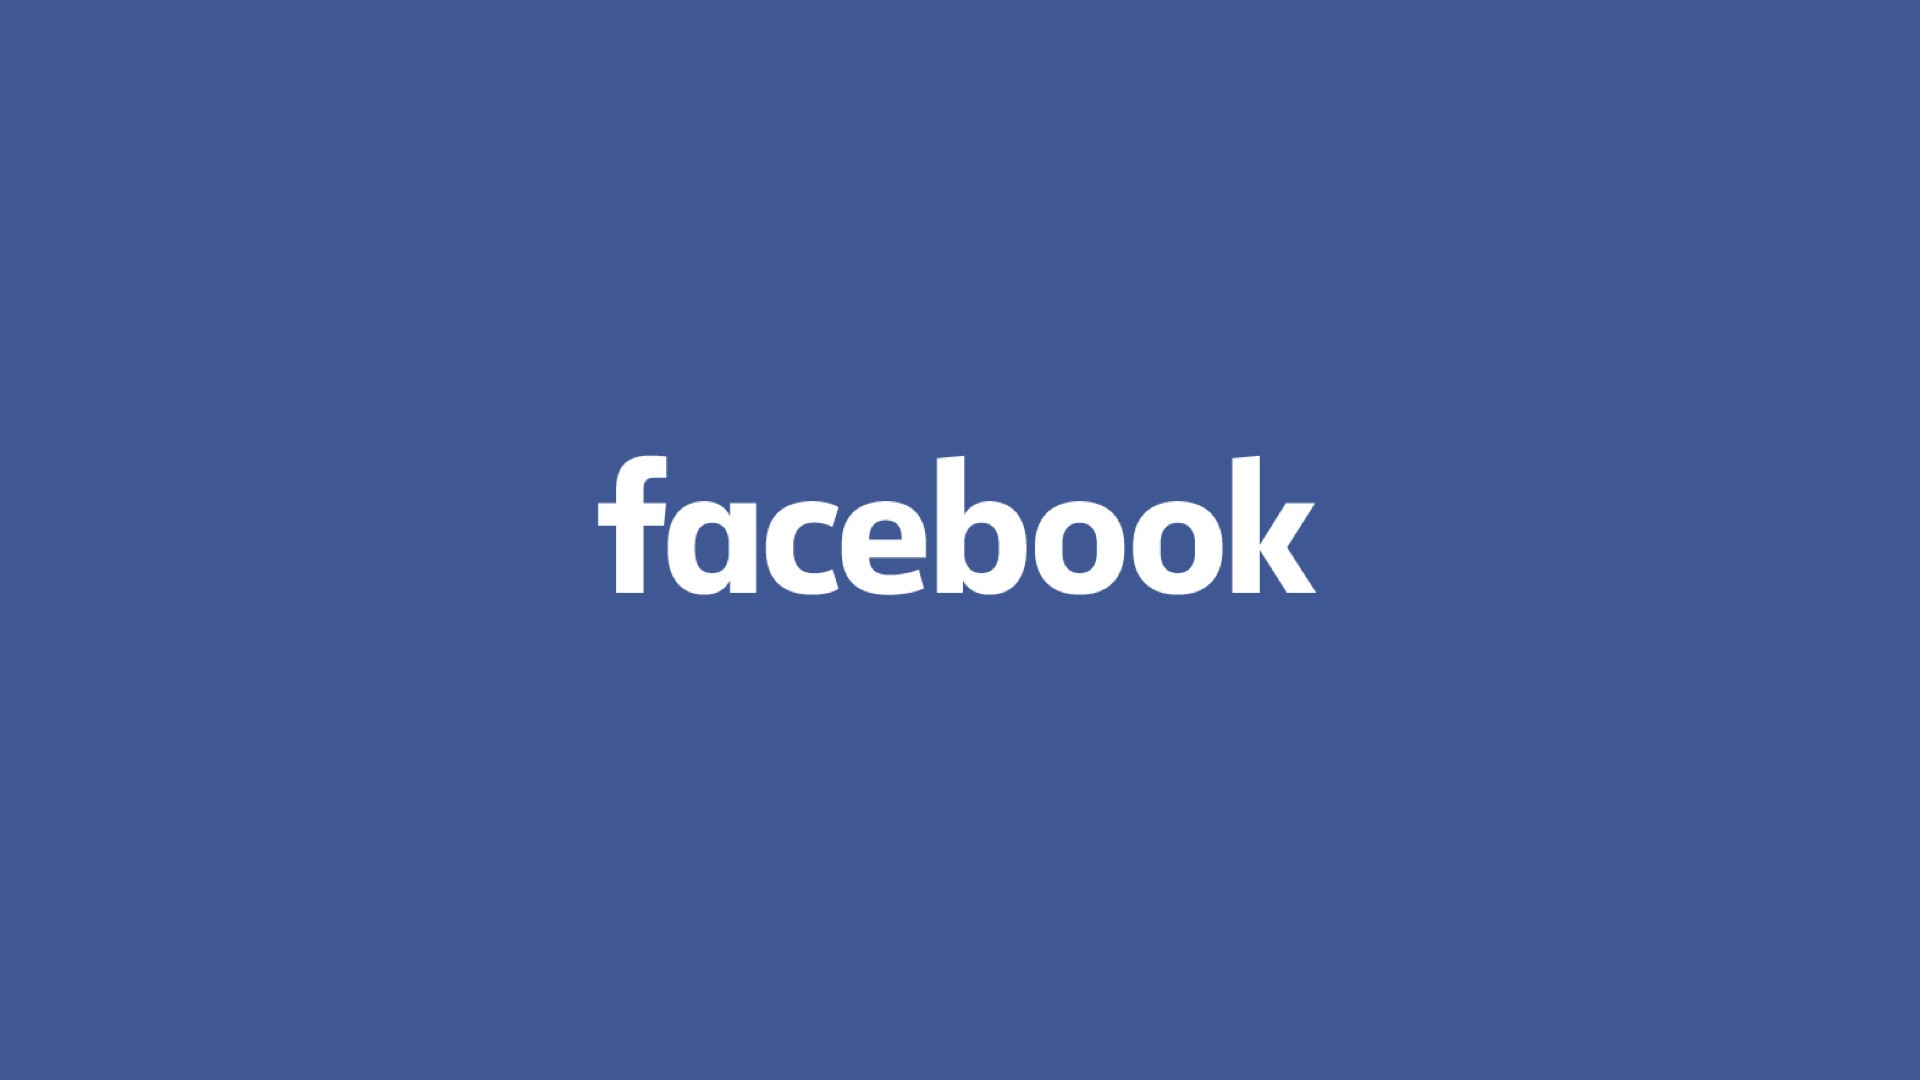 facebook Free Image Sharing Sites List